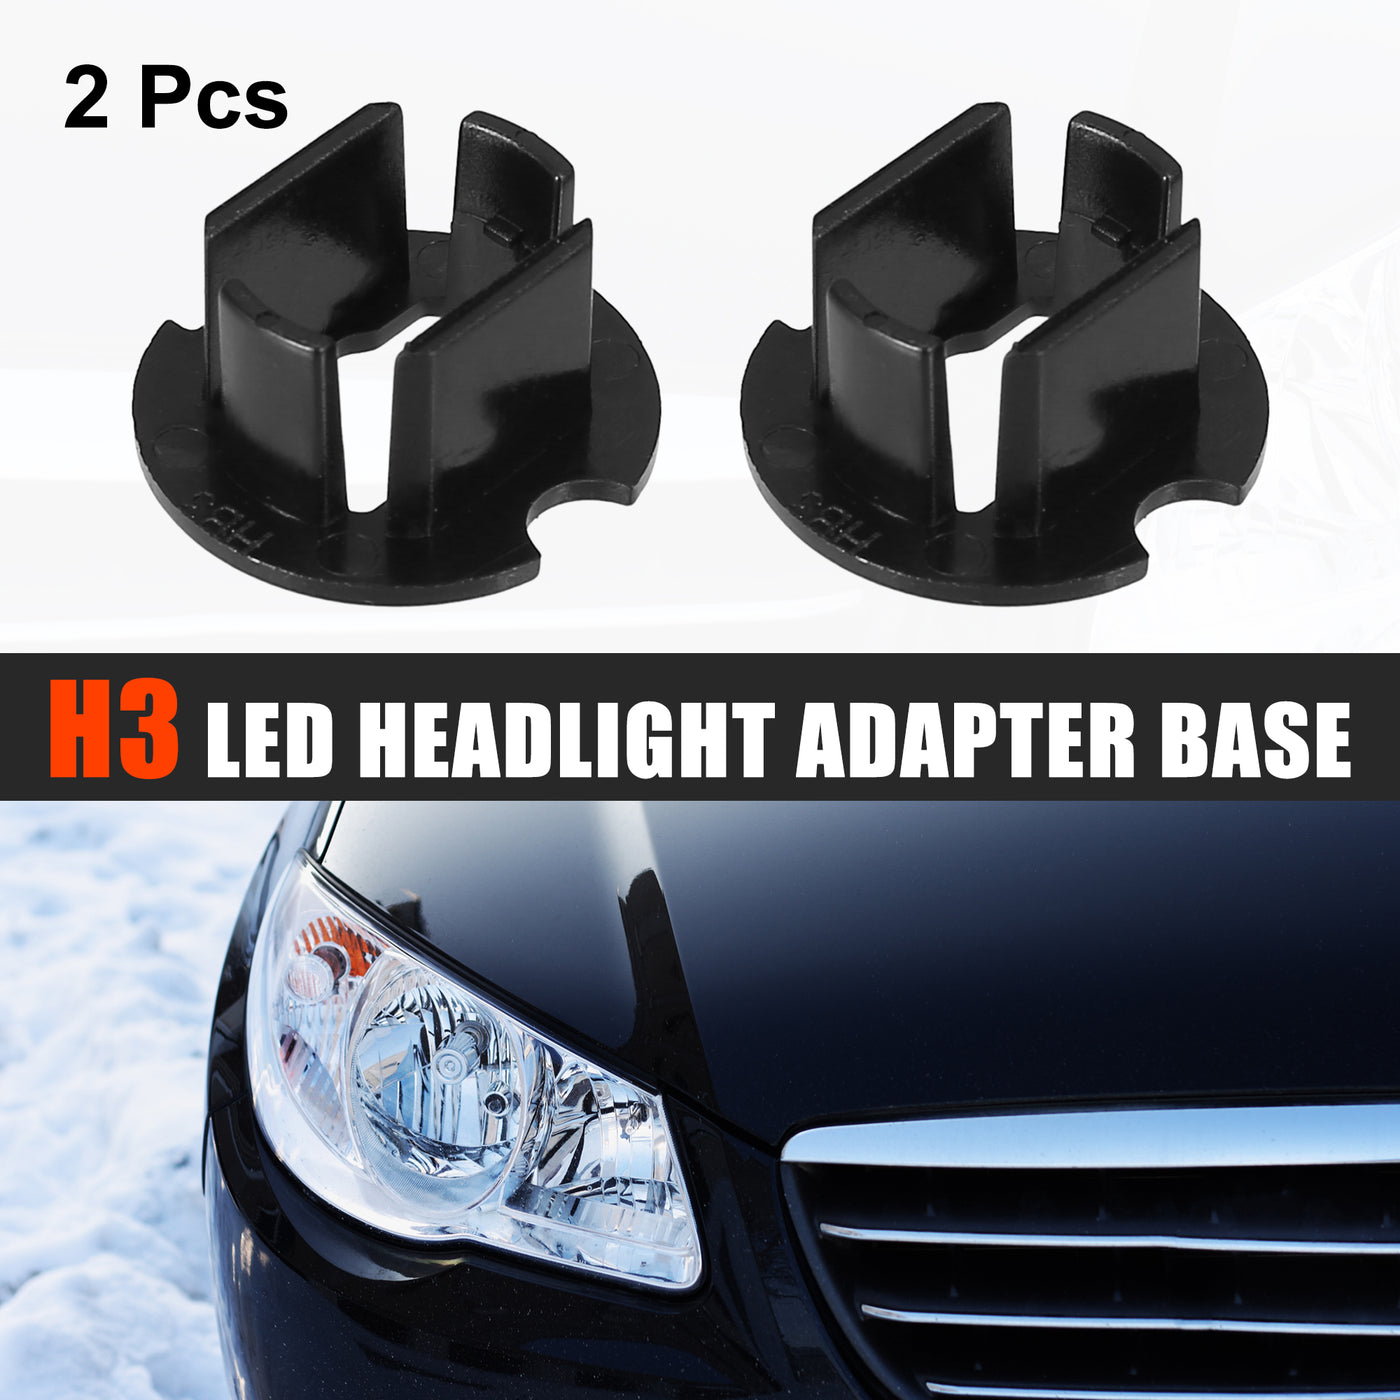 X AUTOHAUX 2pcs H3 LED Headlight Adapter Base Bulb Sockets Retainer Holder Universal for Car Black